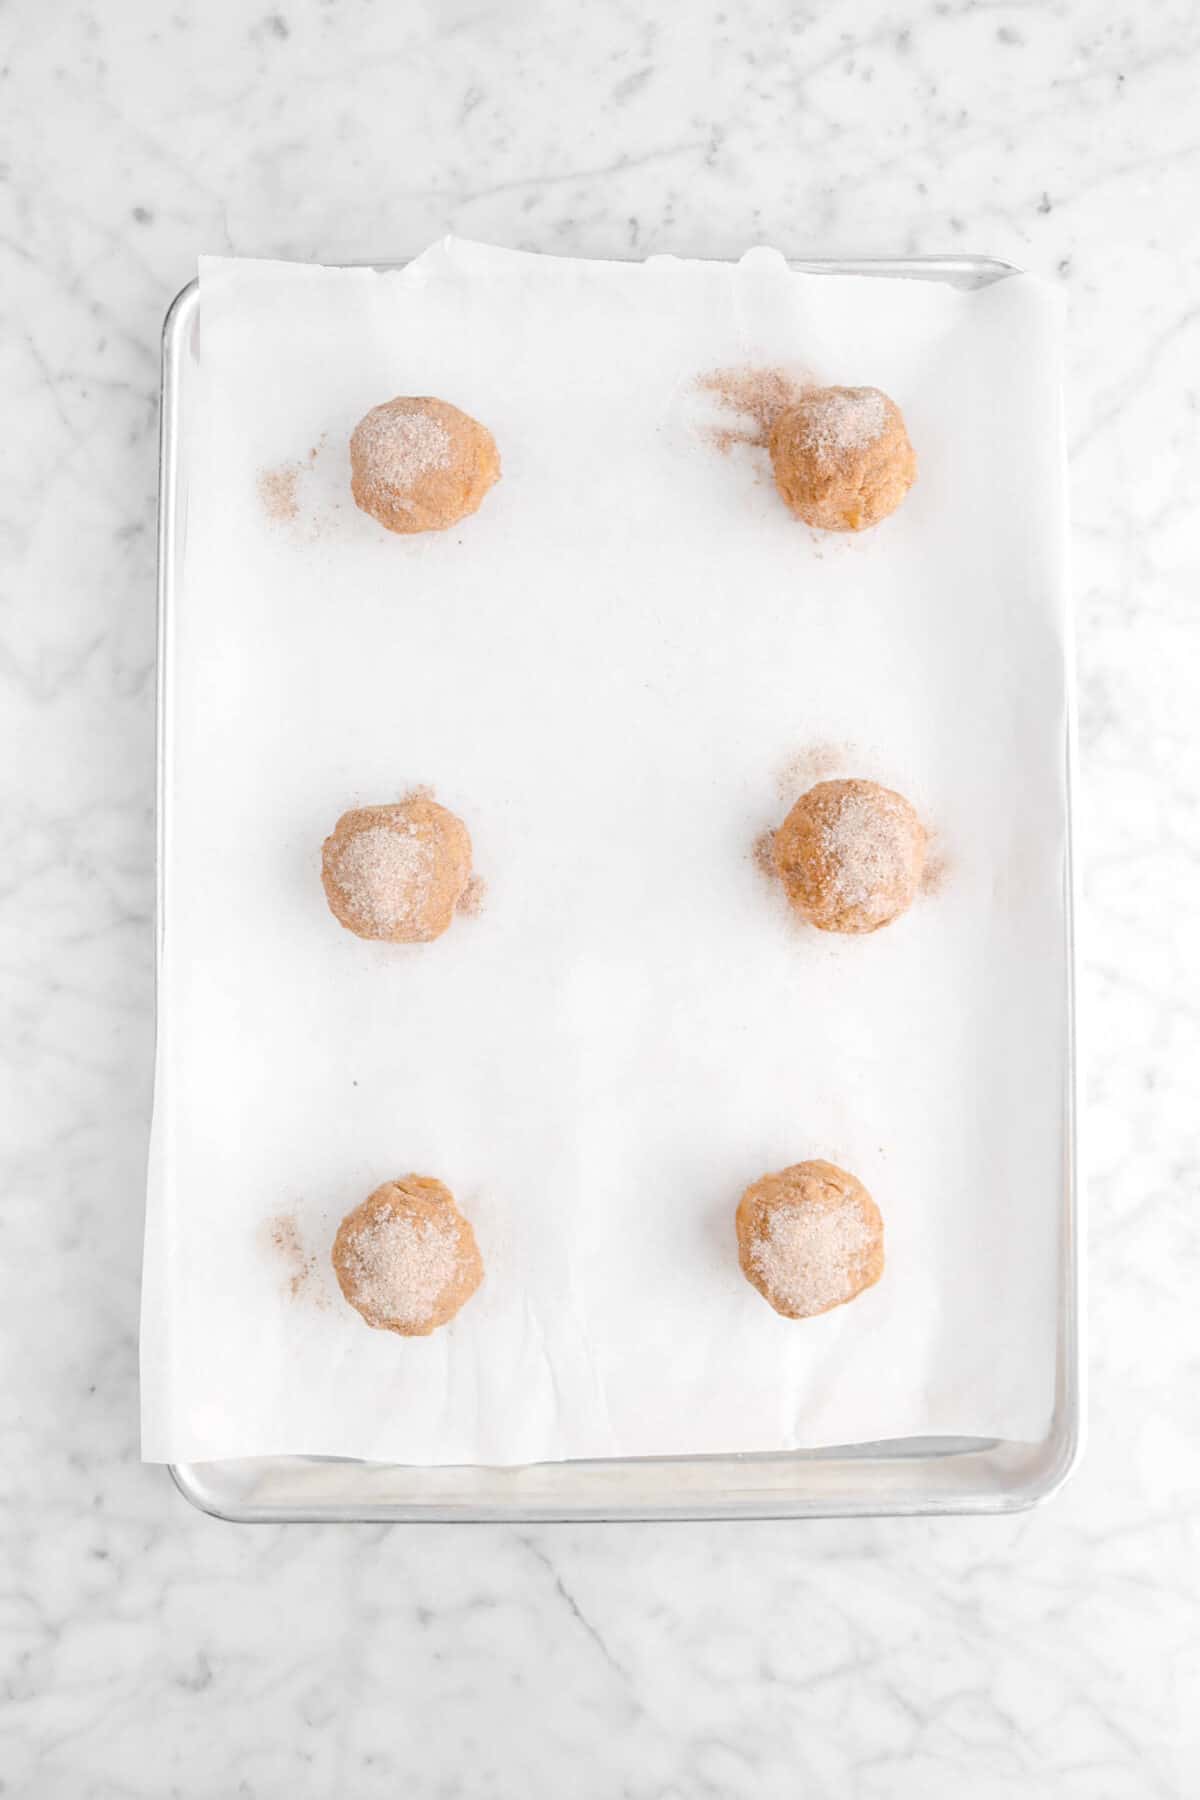 six cookie dough balls on lined parchment